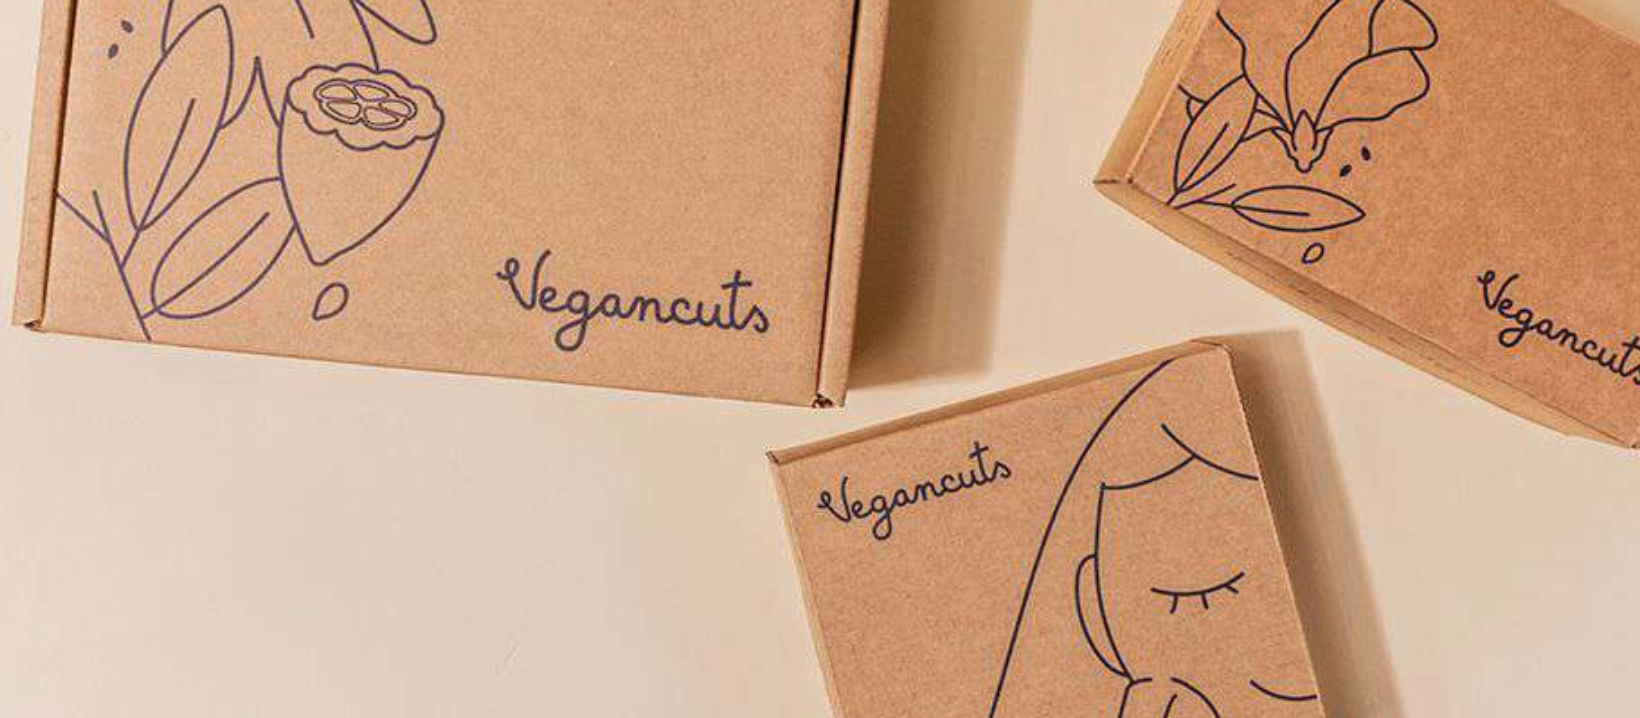 Vegancuts Allergen Boxes Available Now!